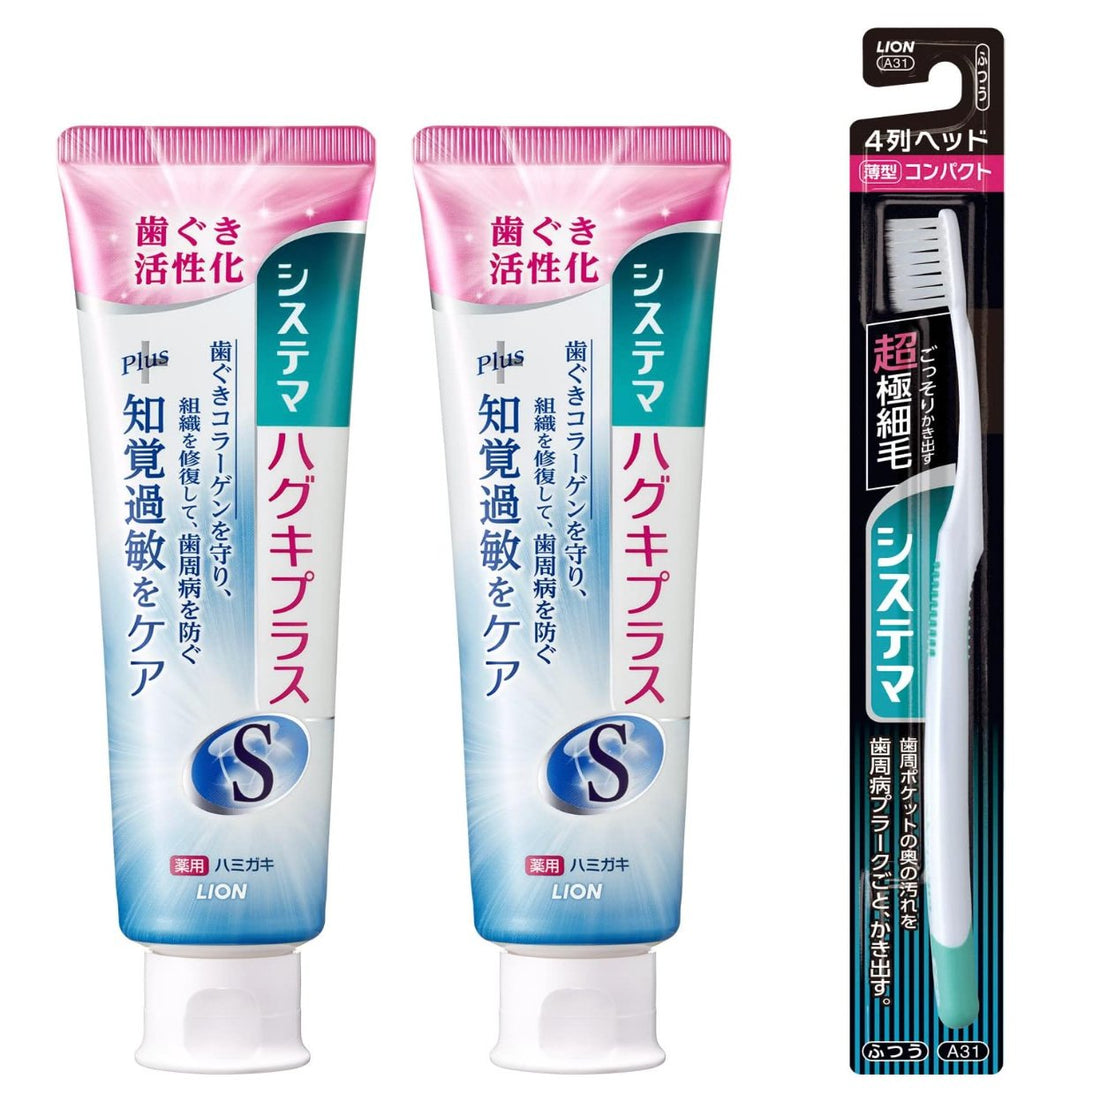 Systema Haguki Plus S (Hypersensitivity) [Quasi-drug] Toothpaste, Toothpaste, Periodontal Disease, Fluorine, 95g x 2 + Toothbrush Included - NihonMura